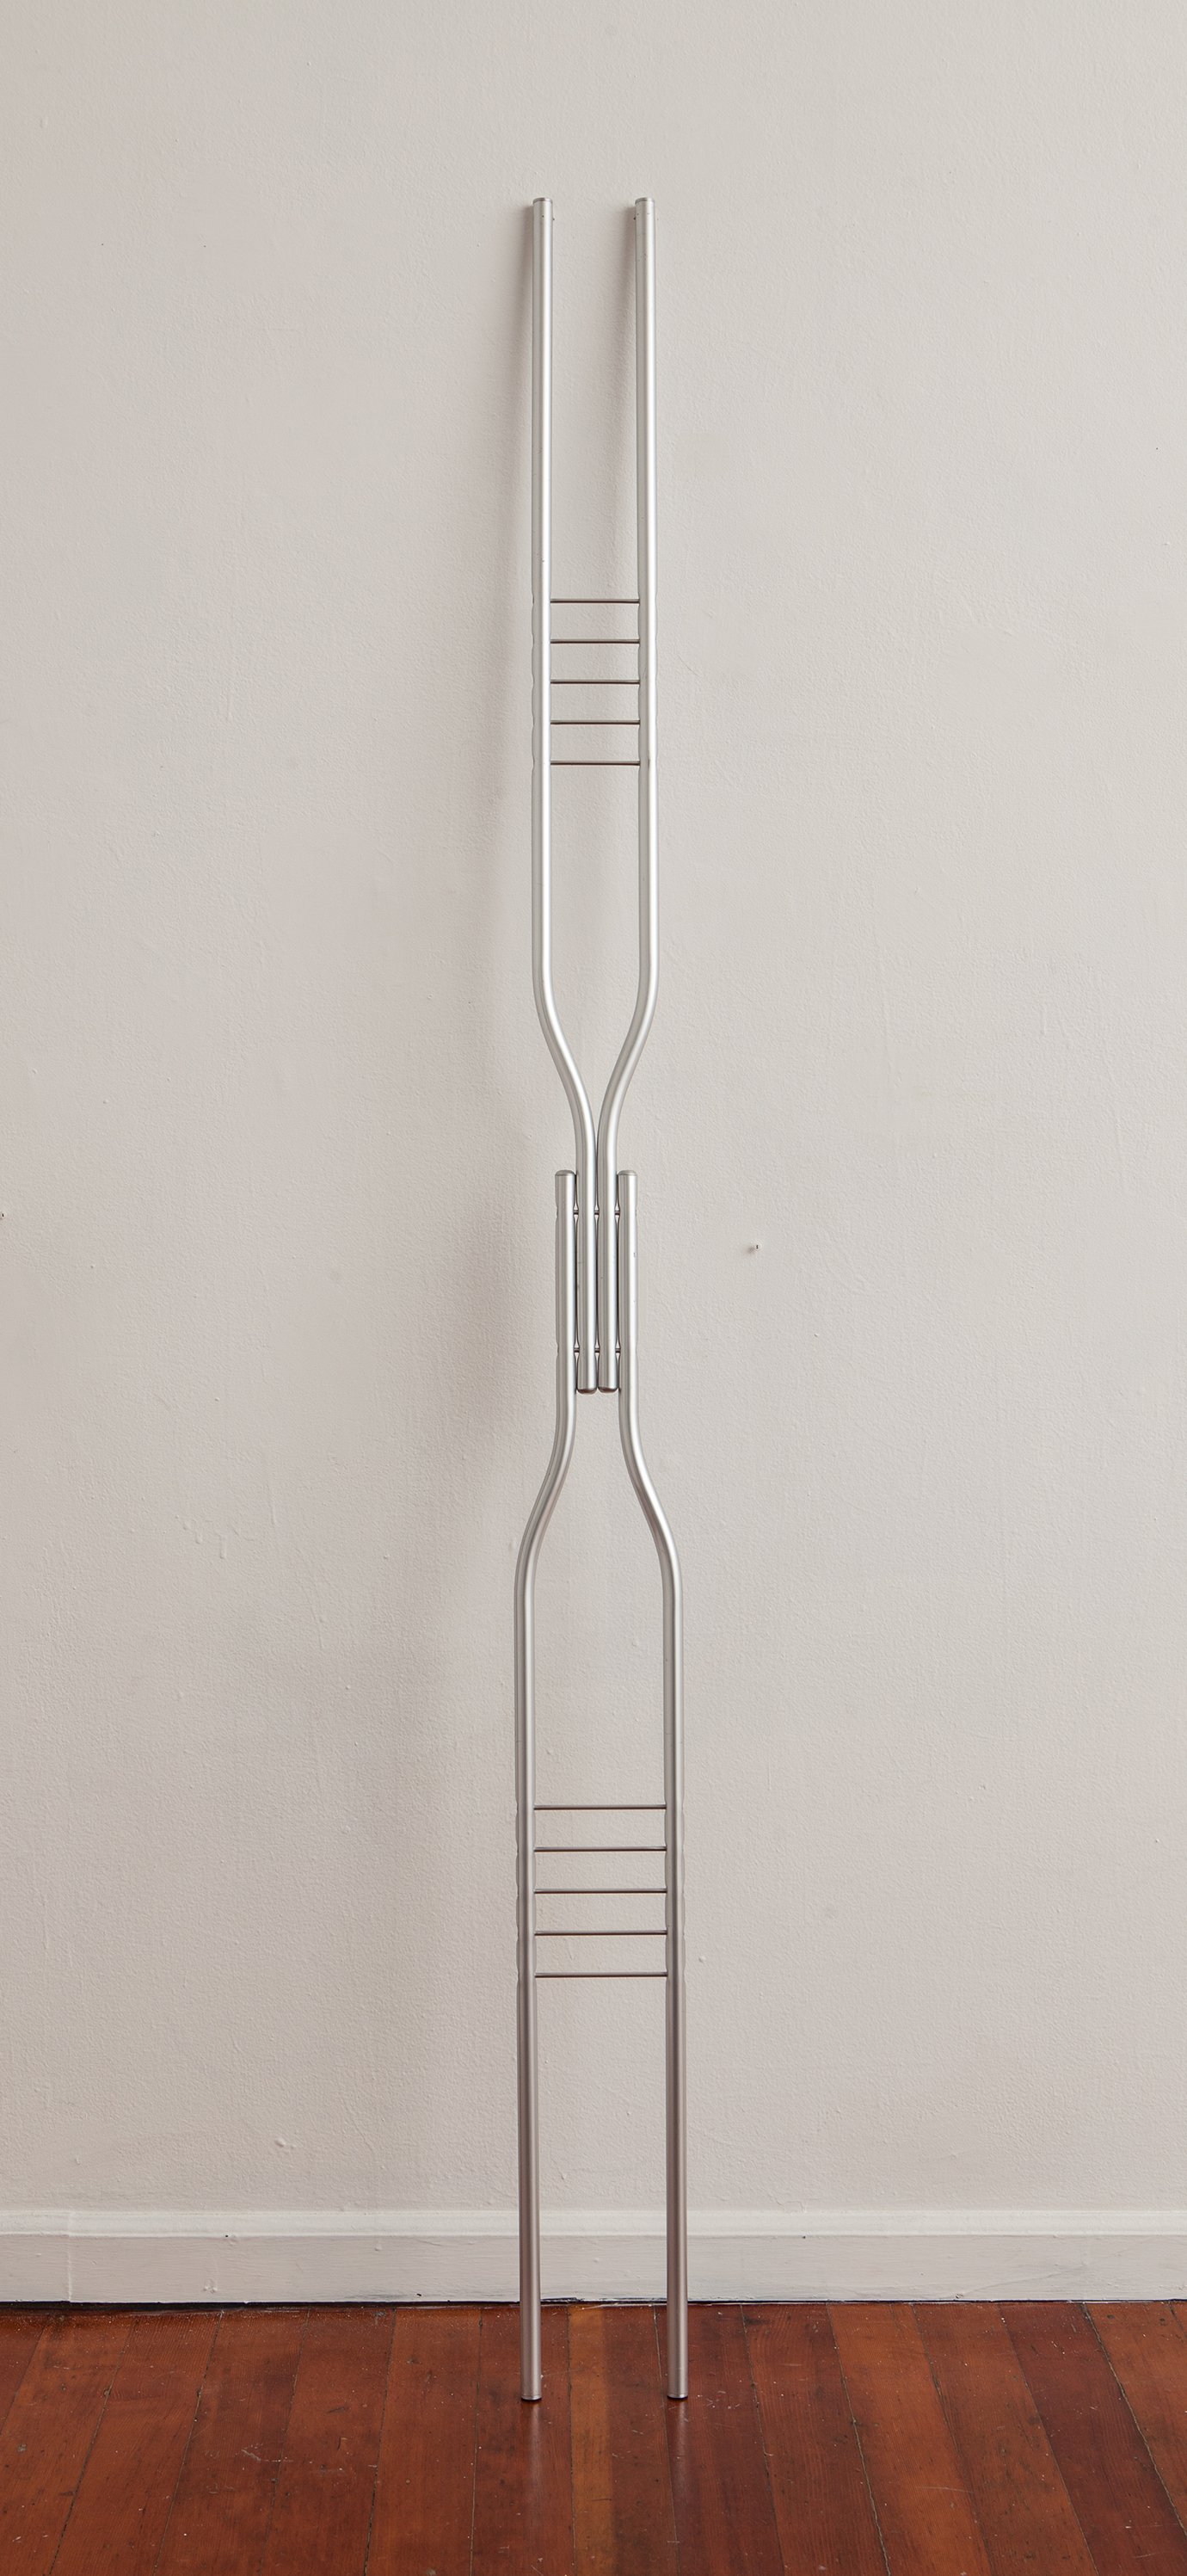   Tuning Staff  Found crutches, aluminum tubes and end caps, enamel, hardware, epoxy 80” x 6” x 1” / 2013 